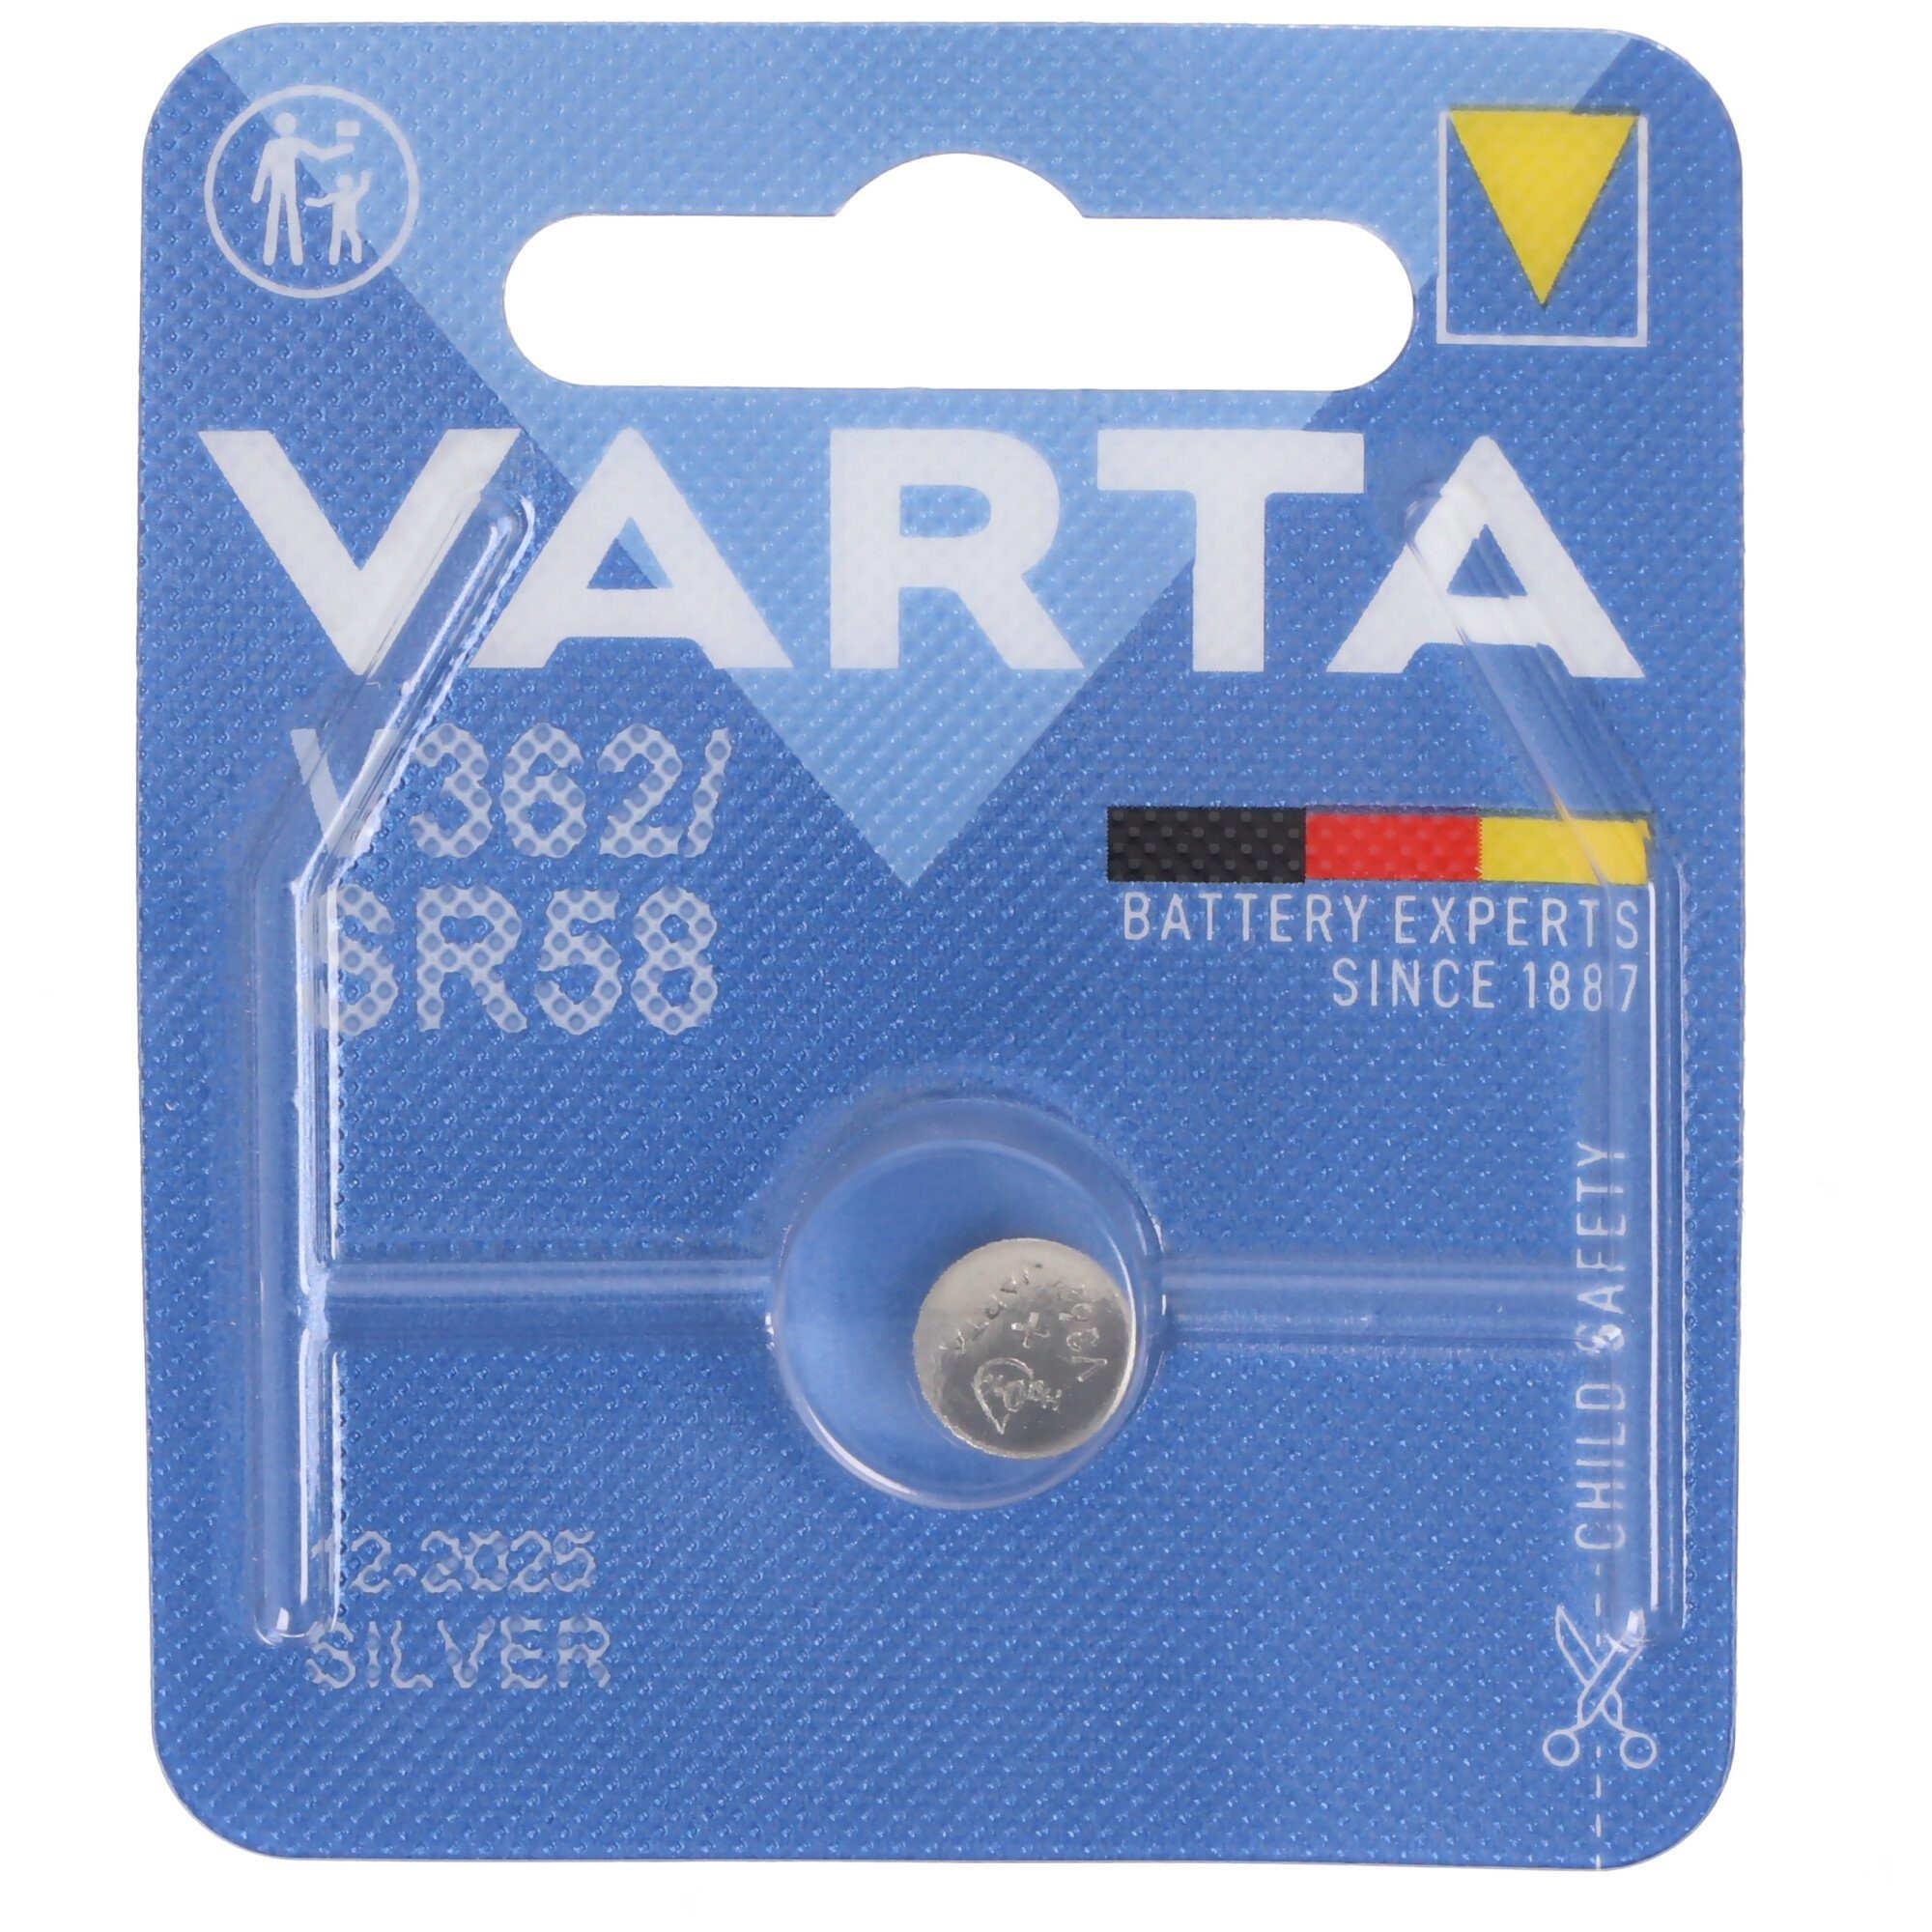 Knopfzelle, Batterie SR58, Varta 362, Silver Knopfzelle VARTA 1.55V Oxide, Electronics